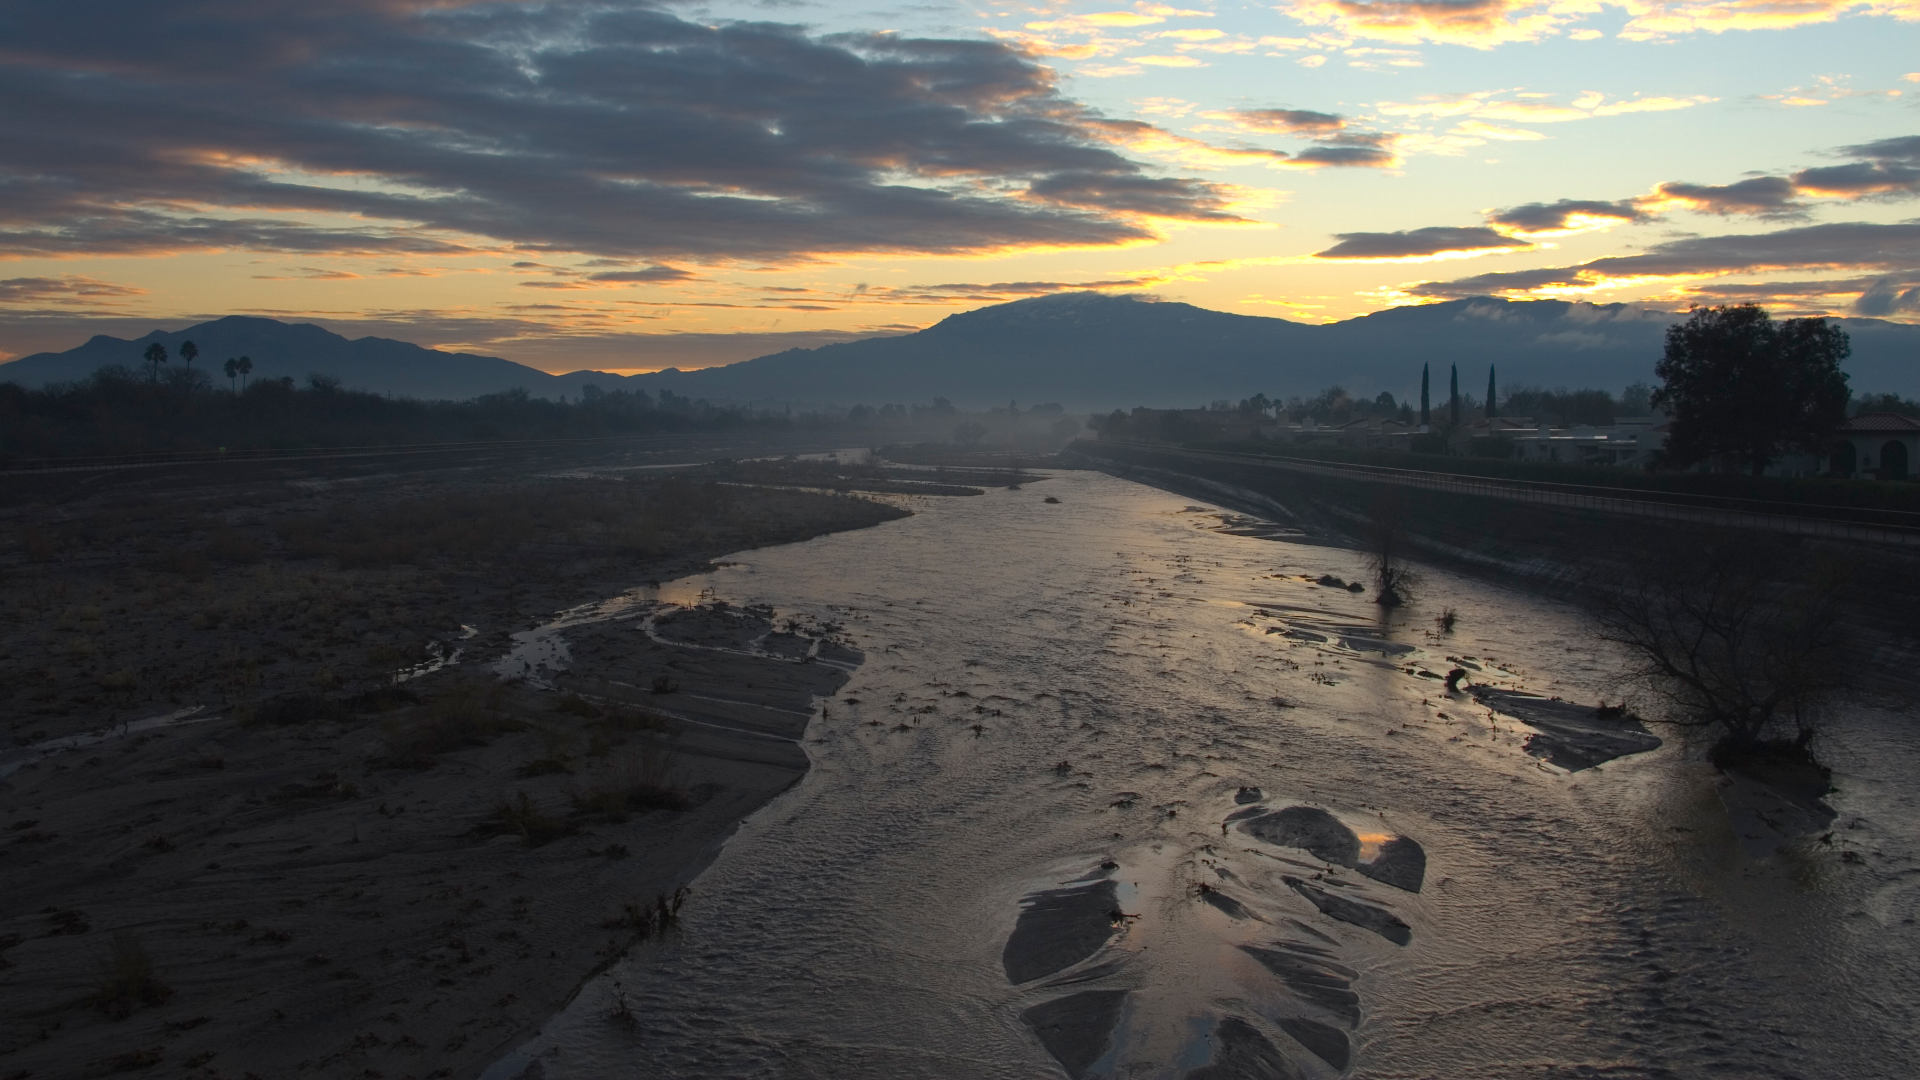 The Rillito River, an ephemeral waterway in Tucson, Arizona.